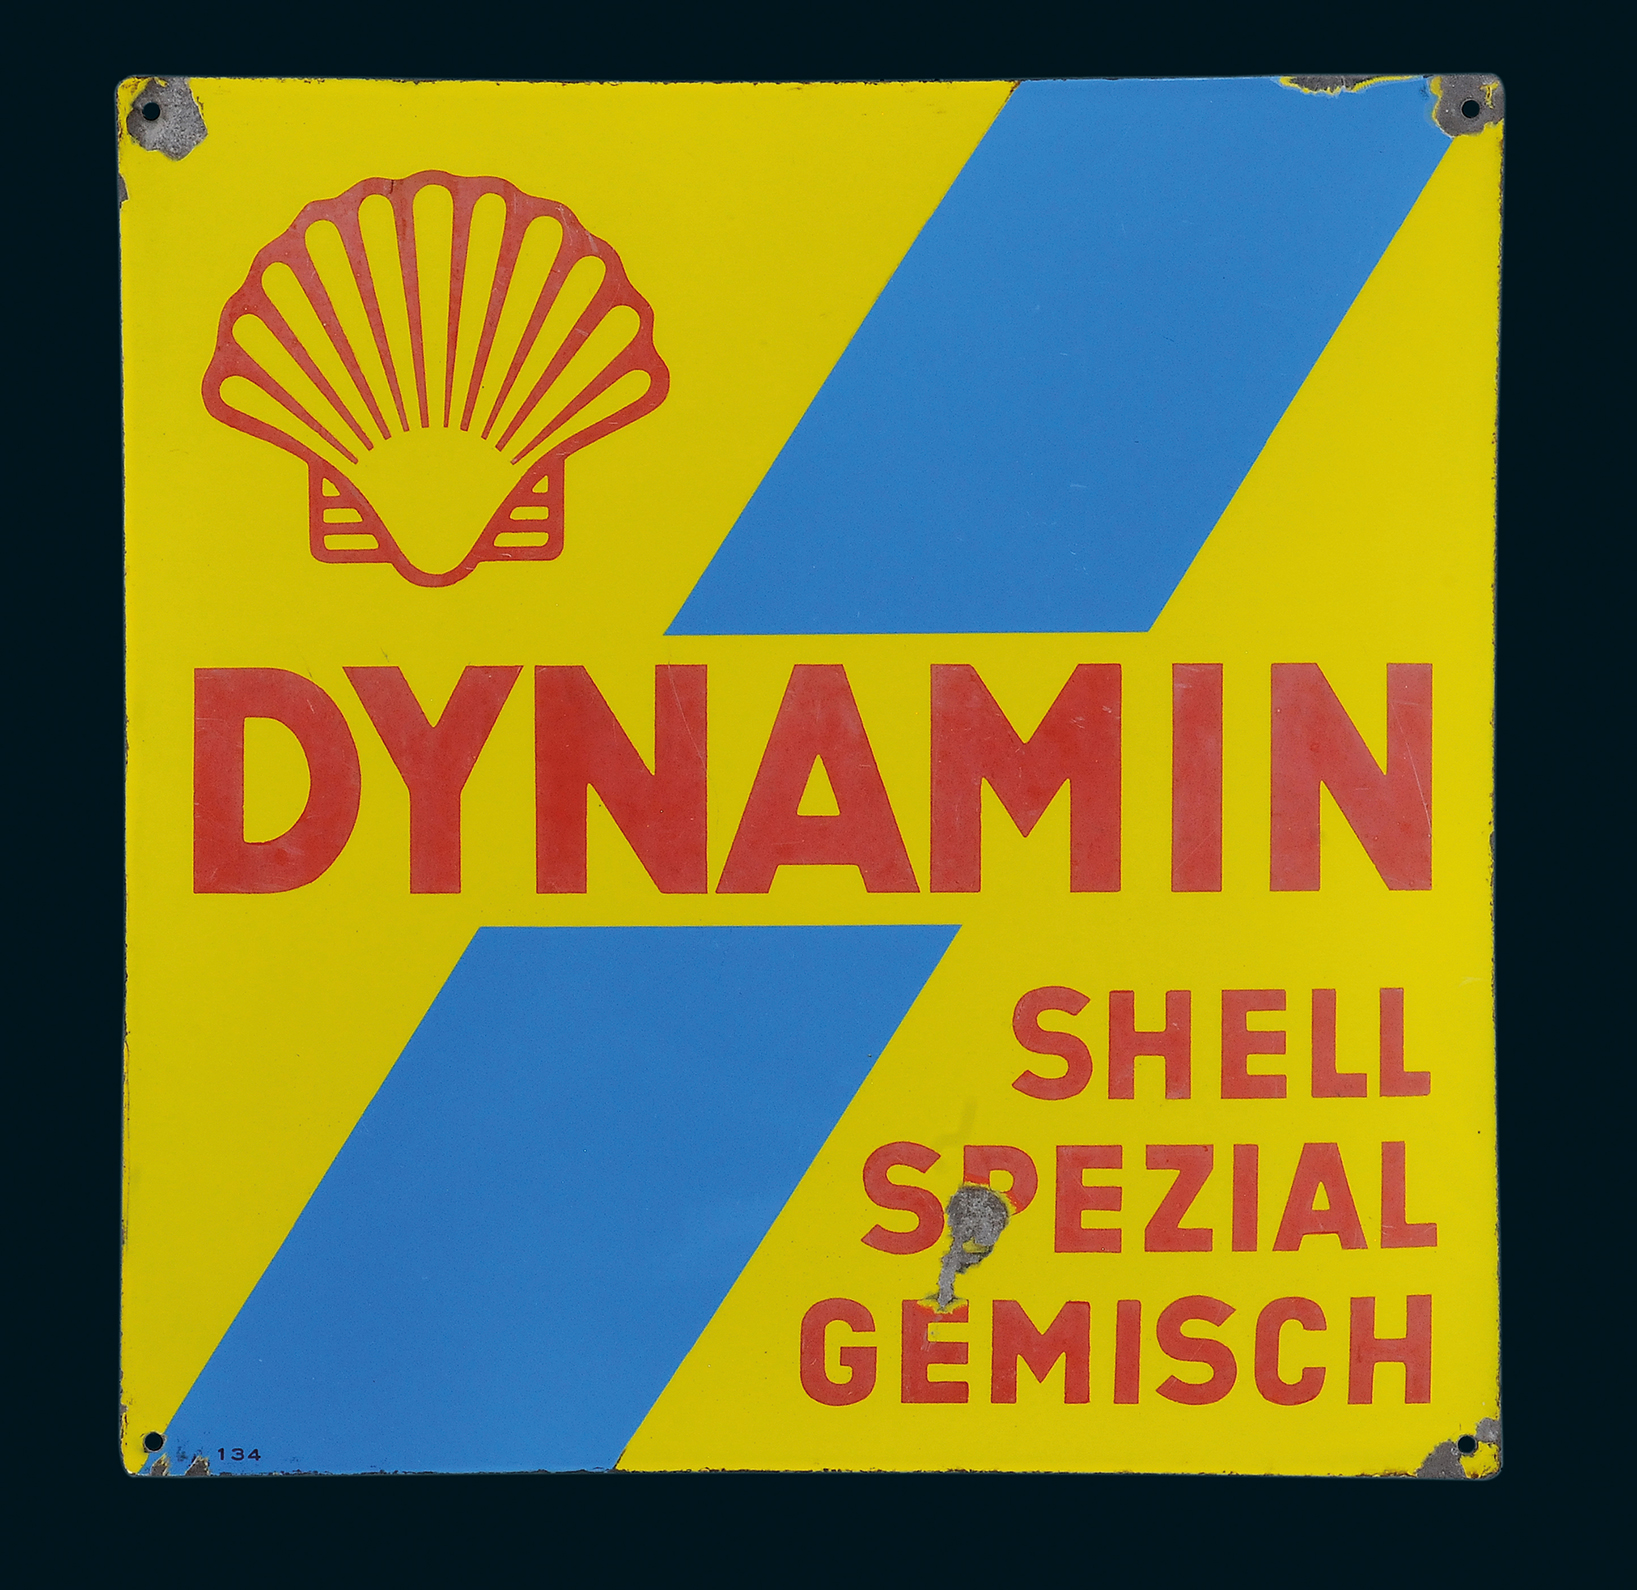 Shell Dynamin